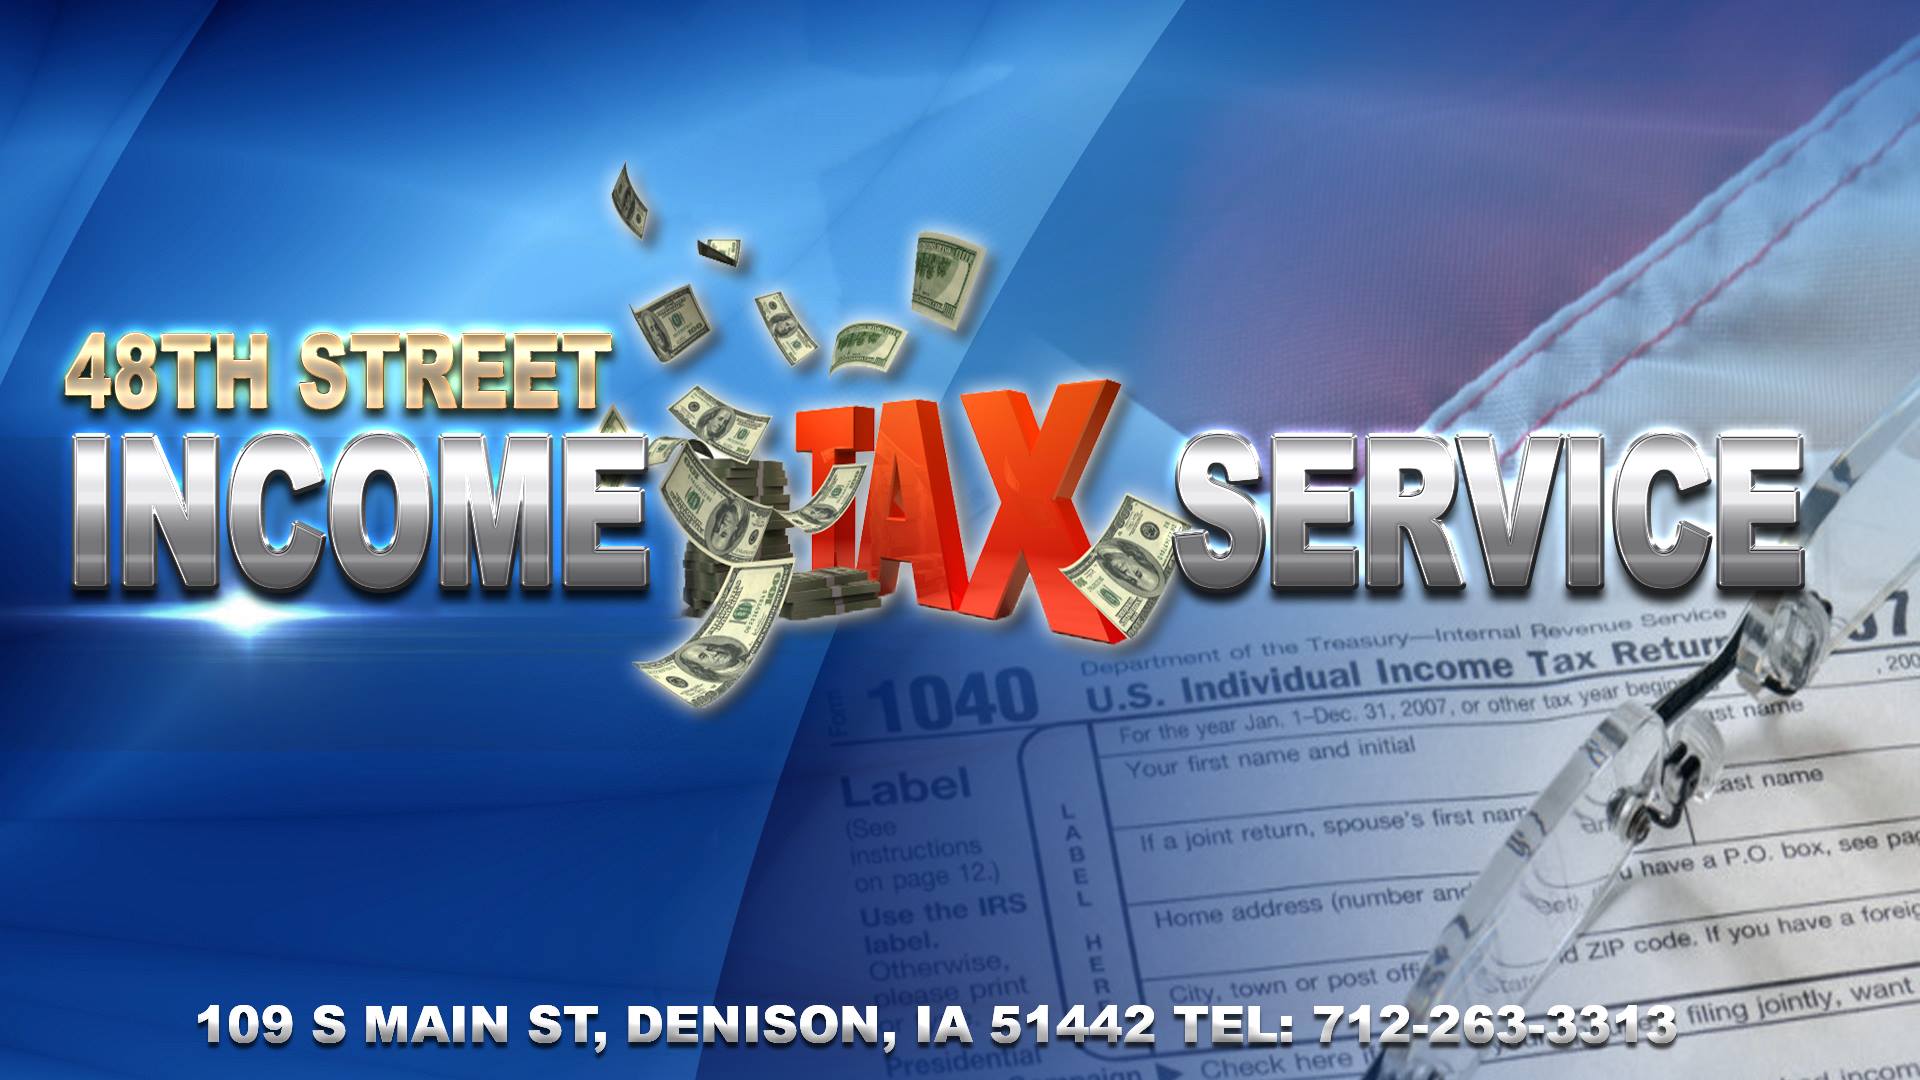 48TH STREET INCOME TAX SERVICE 109 S Main St, Denison Iowa 51442